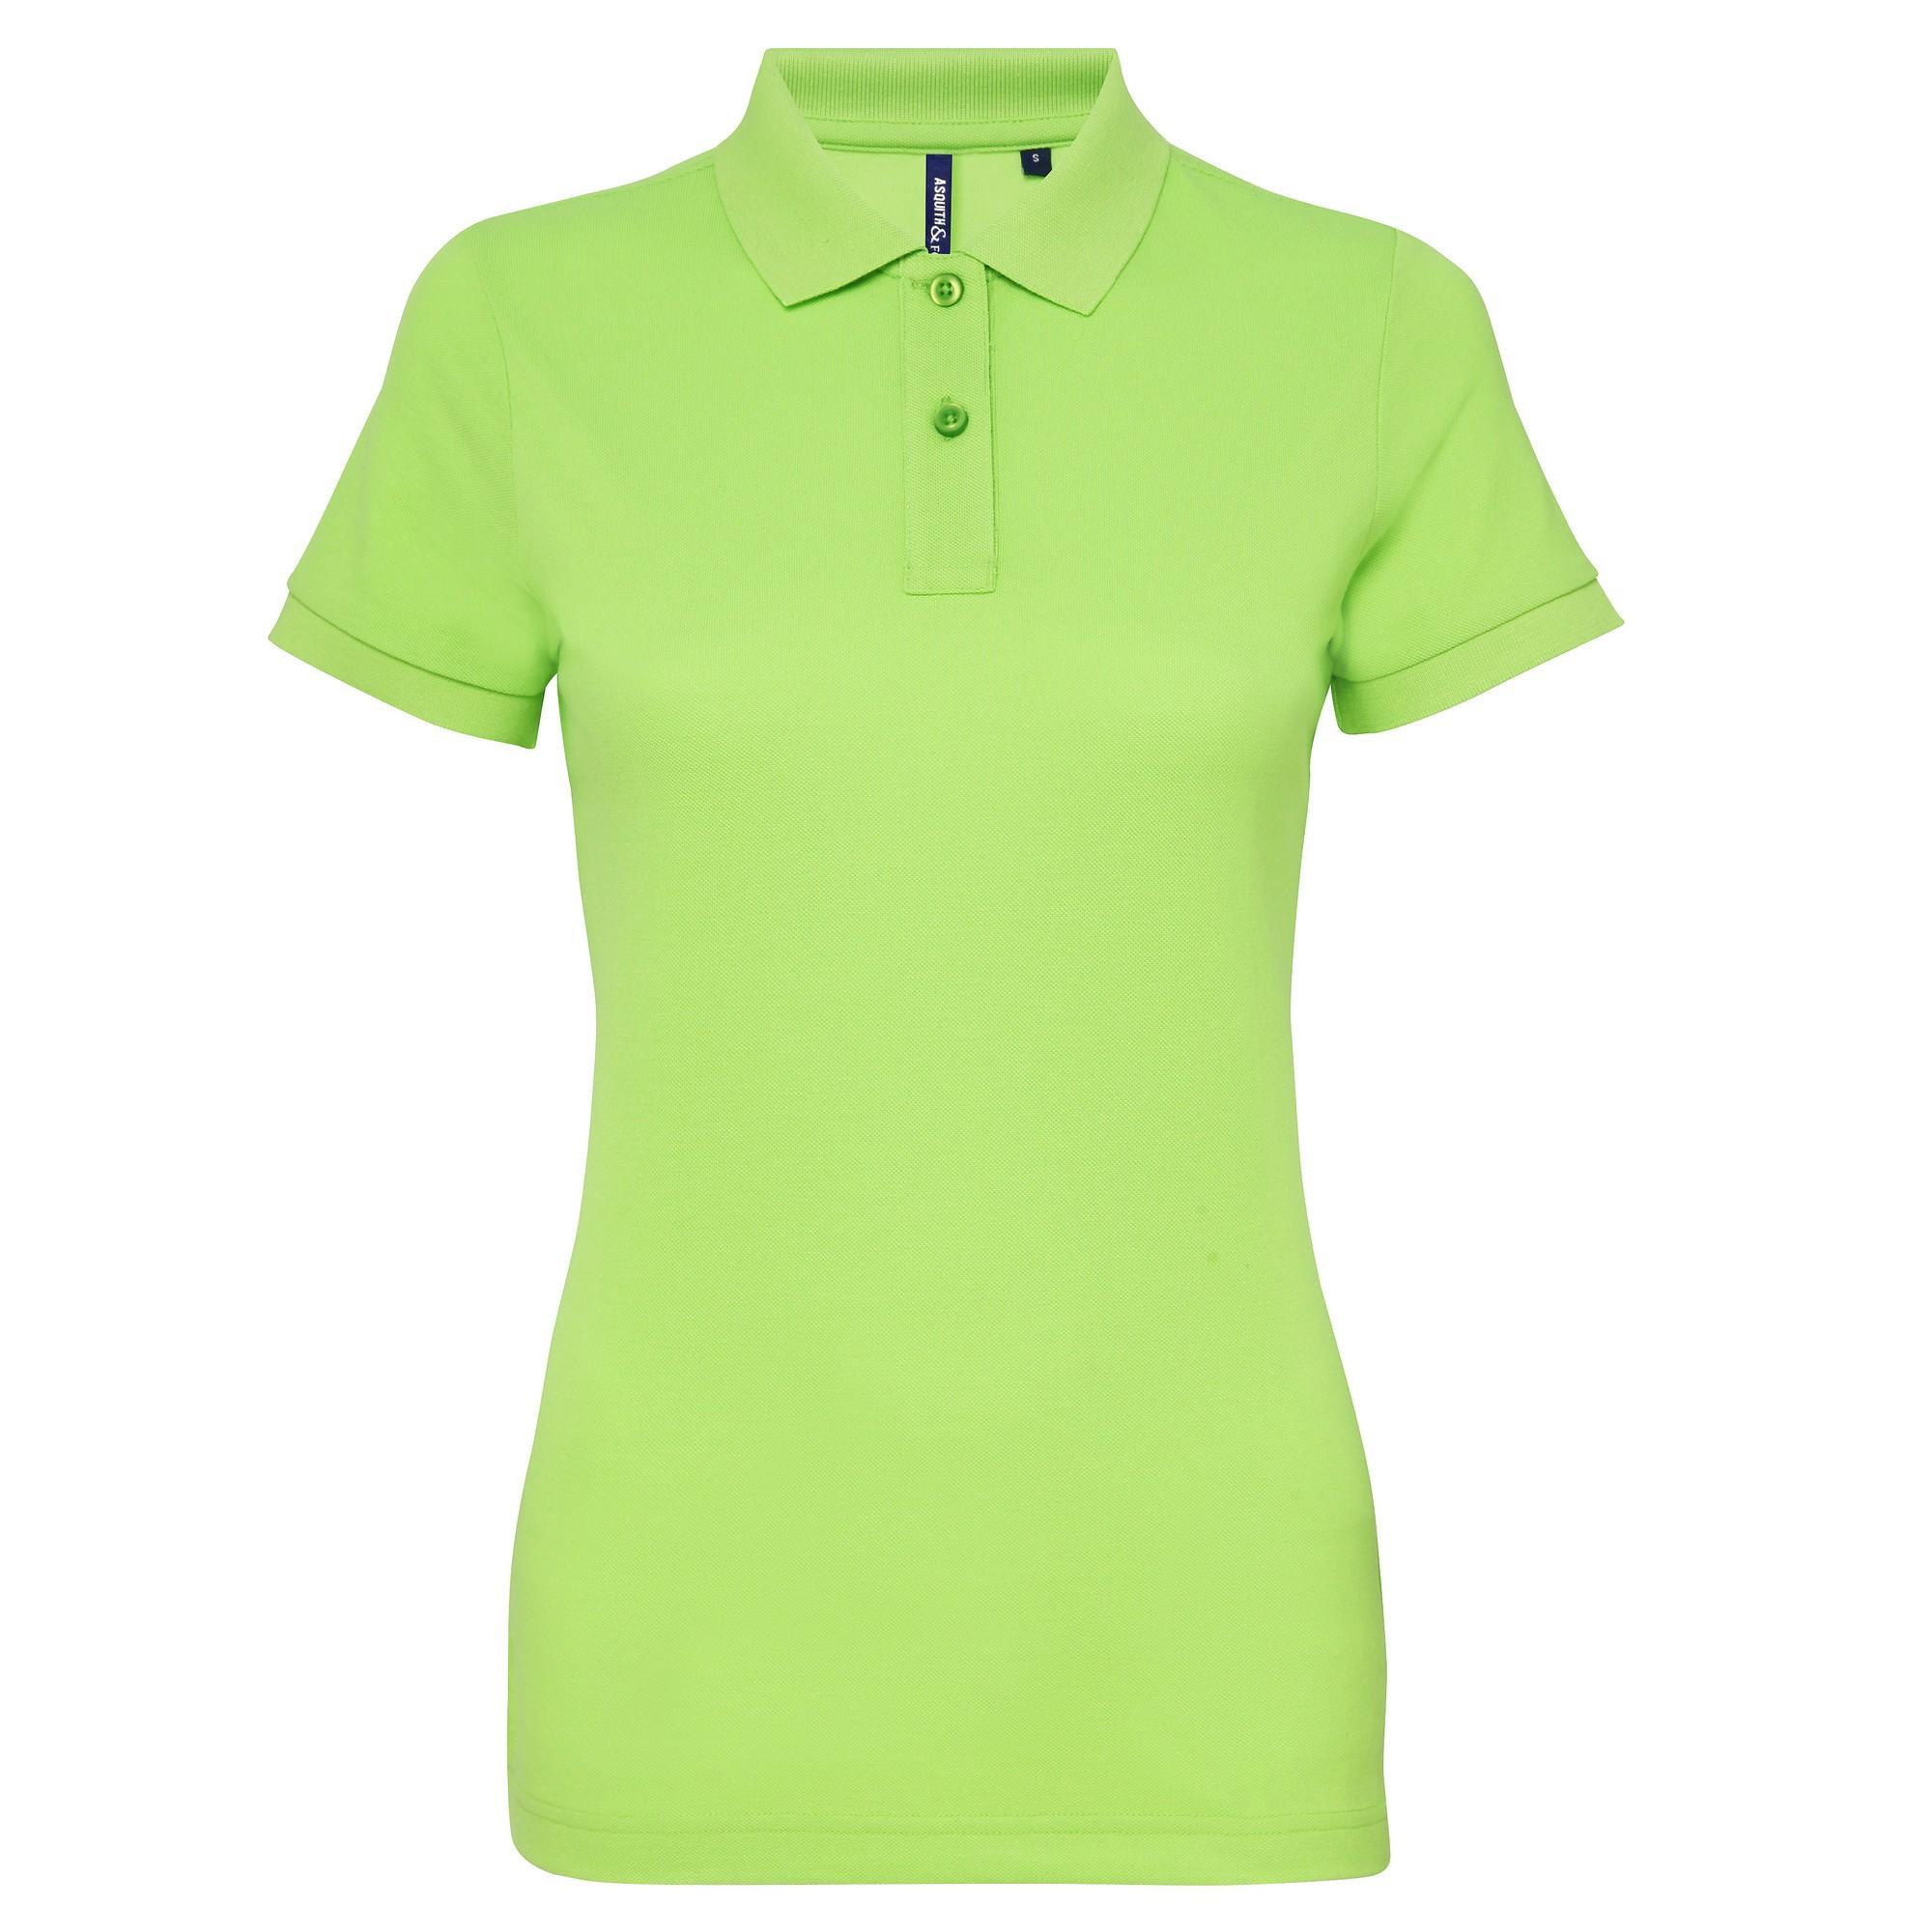 Asquith & Fox Womens/Ladies Short Sleeve Performance Blend Polo Shirt (Neon Green) (L)